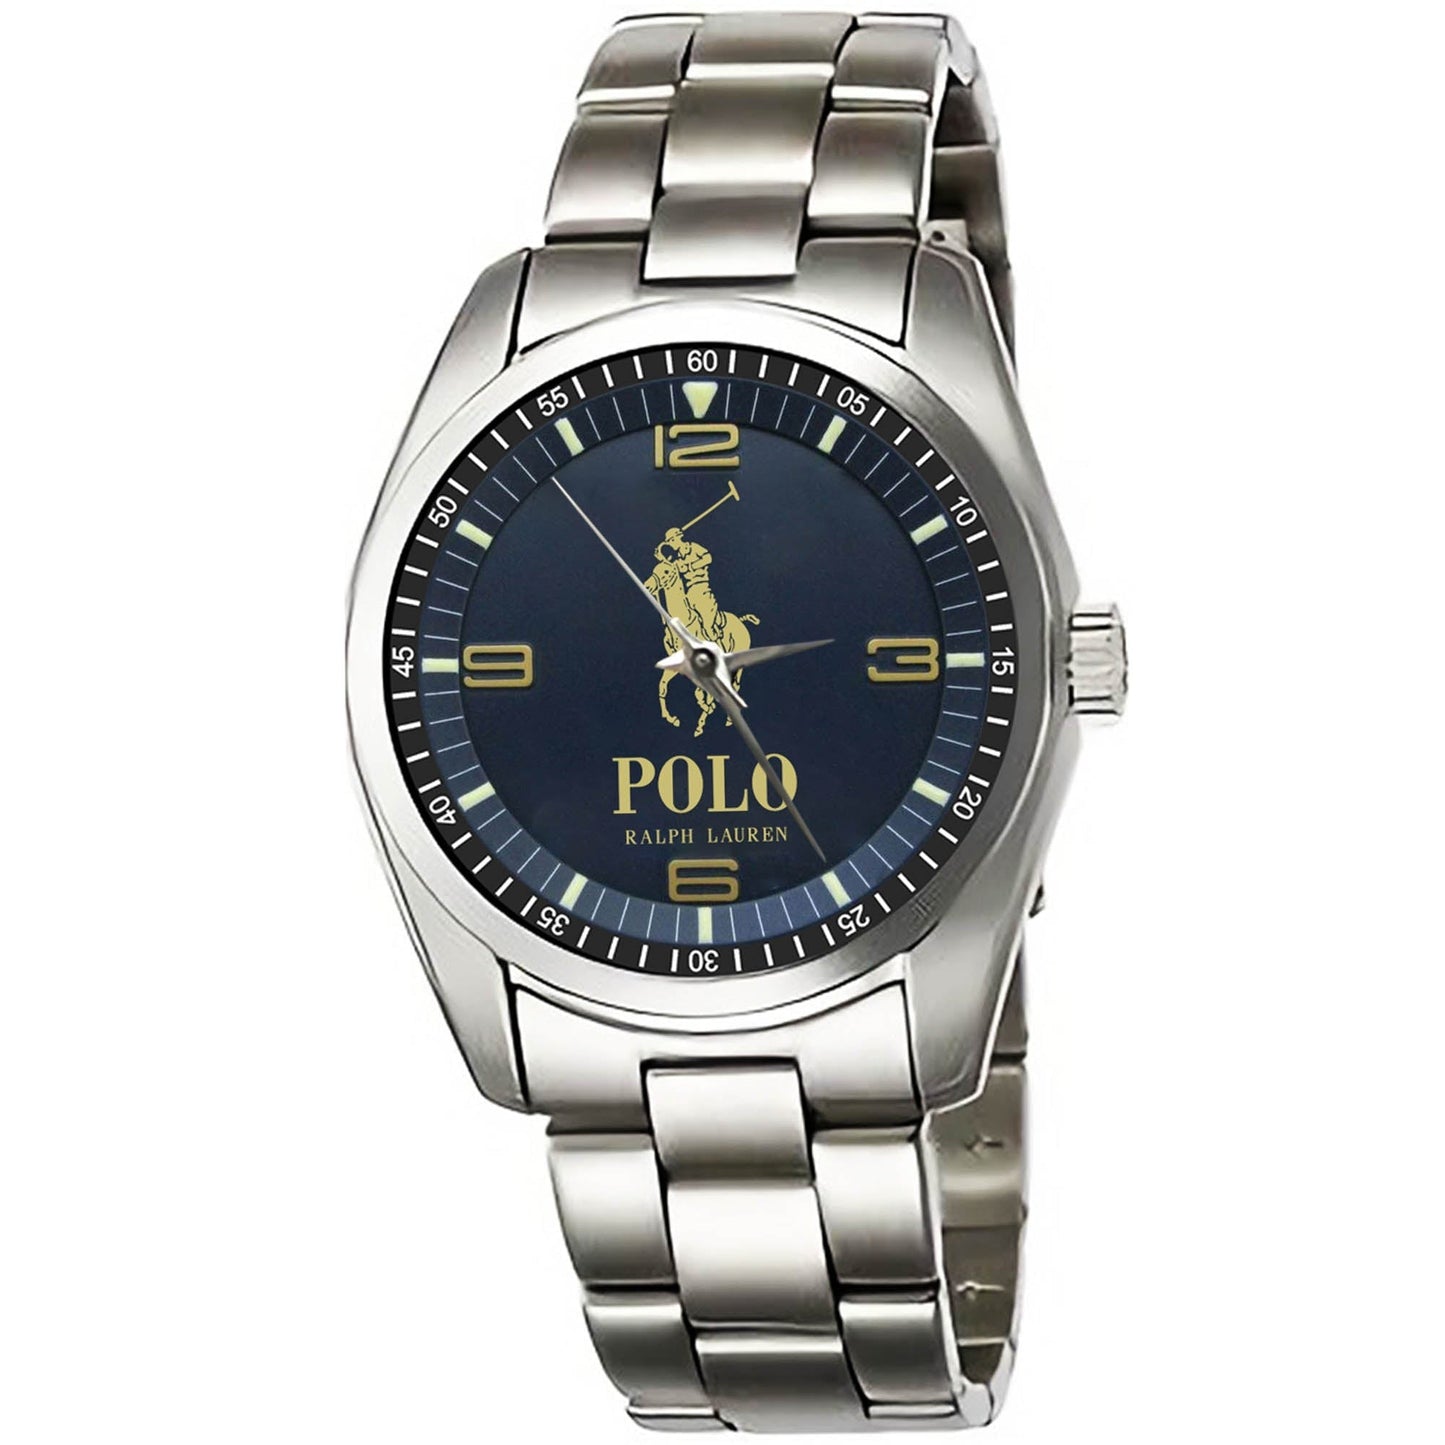 Polo Ralph Lauren Watches KP645